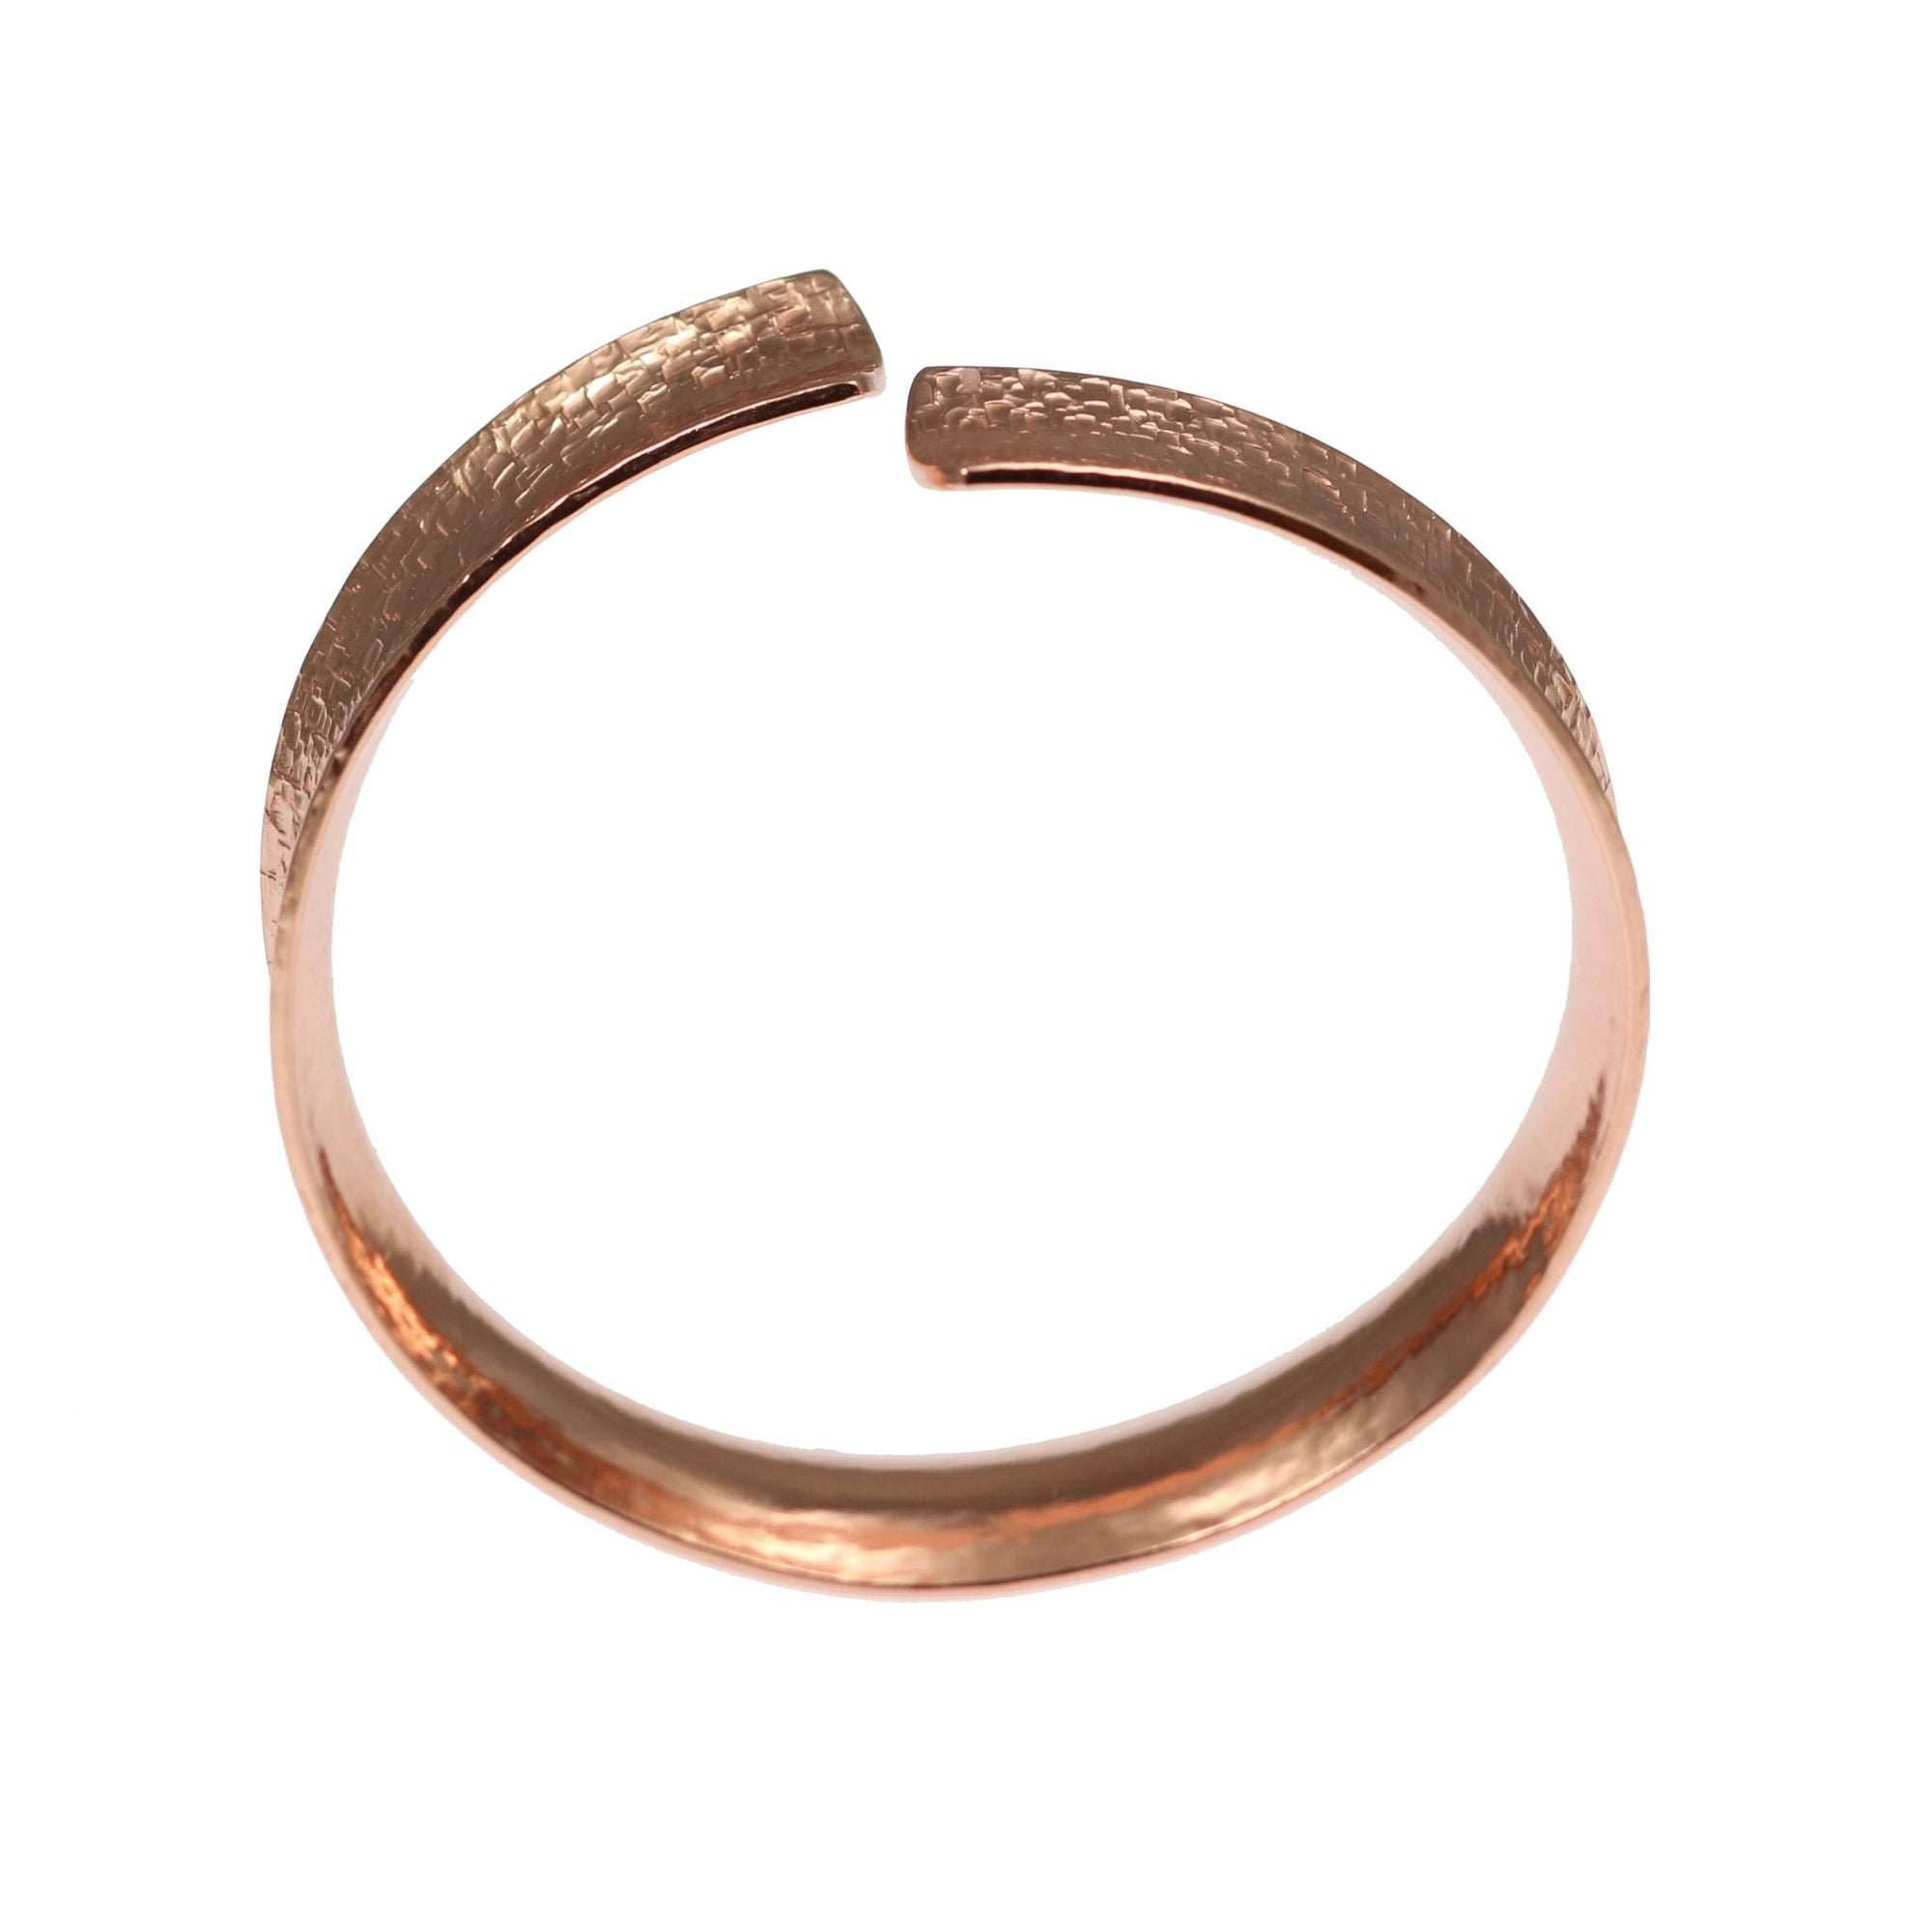 Shape of Anticlastic Texturized Copper Bangle Bracelet